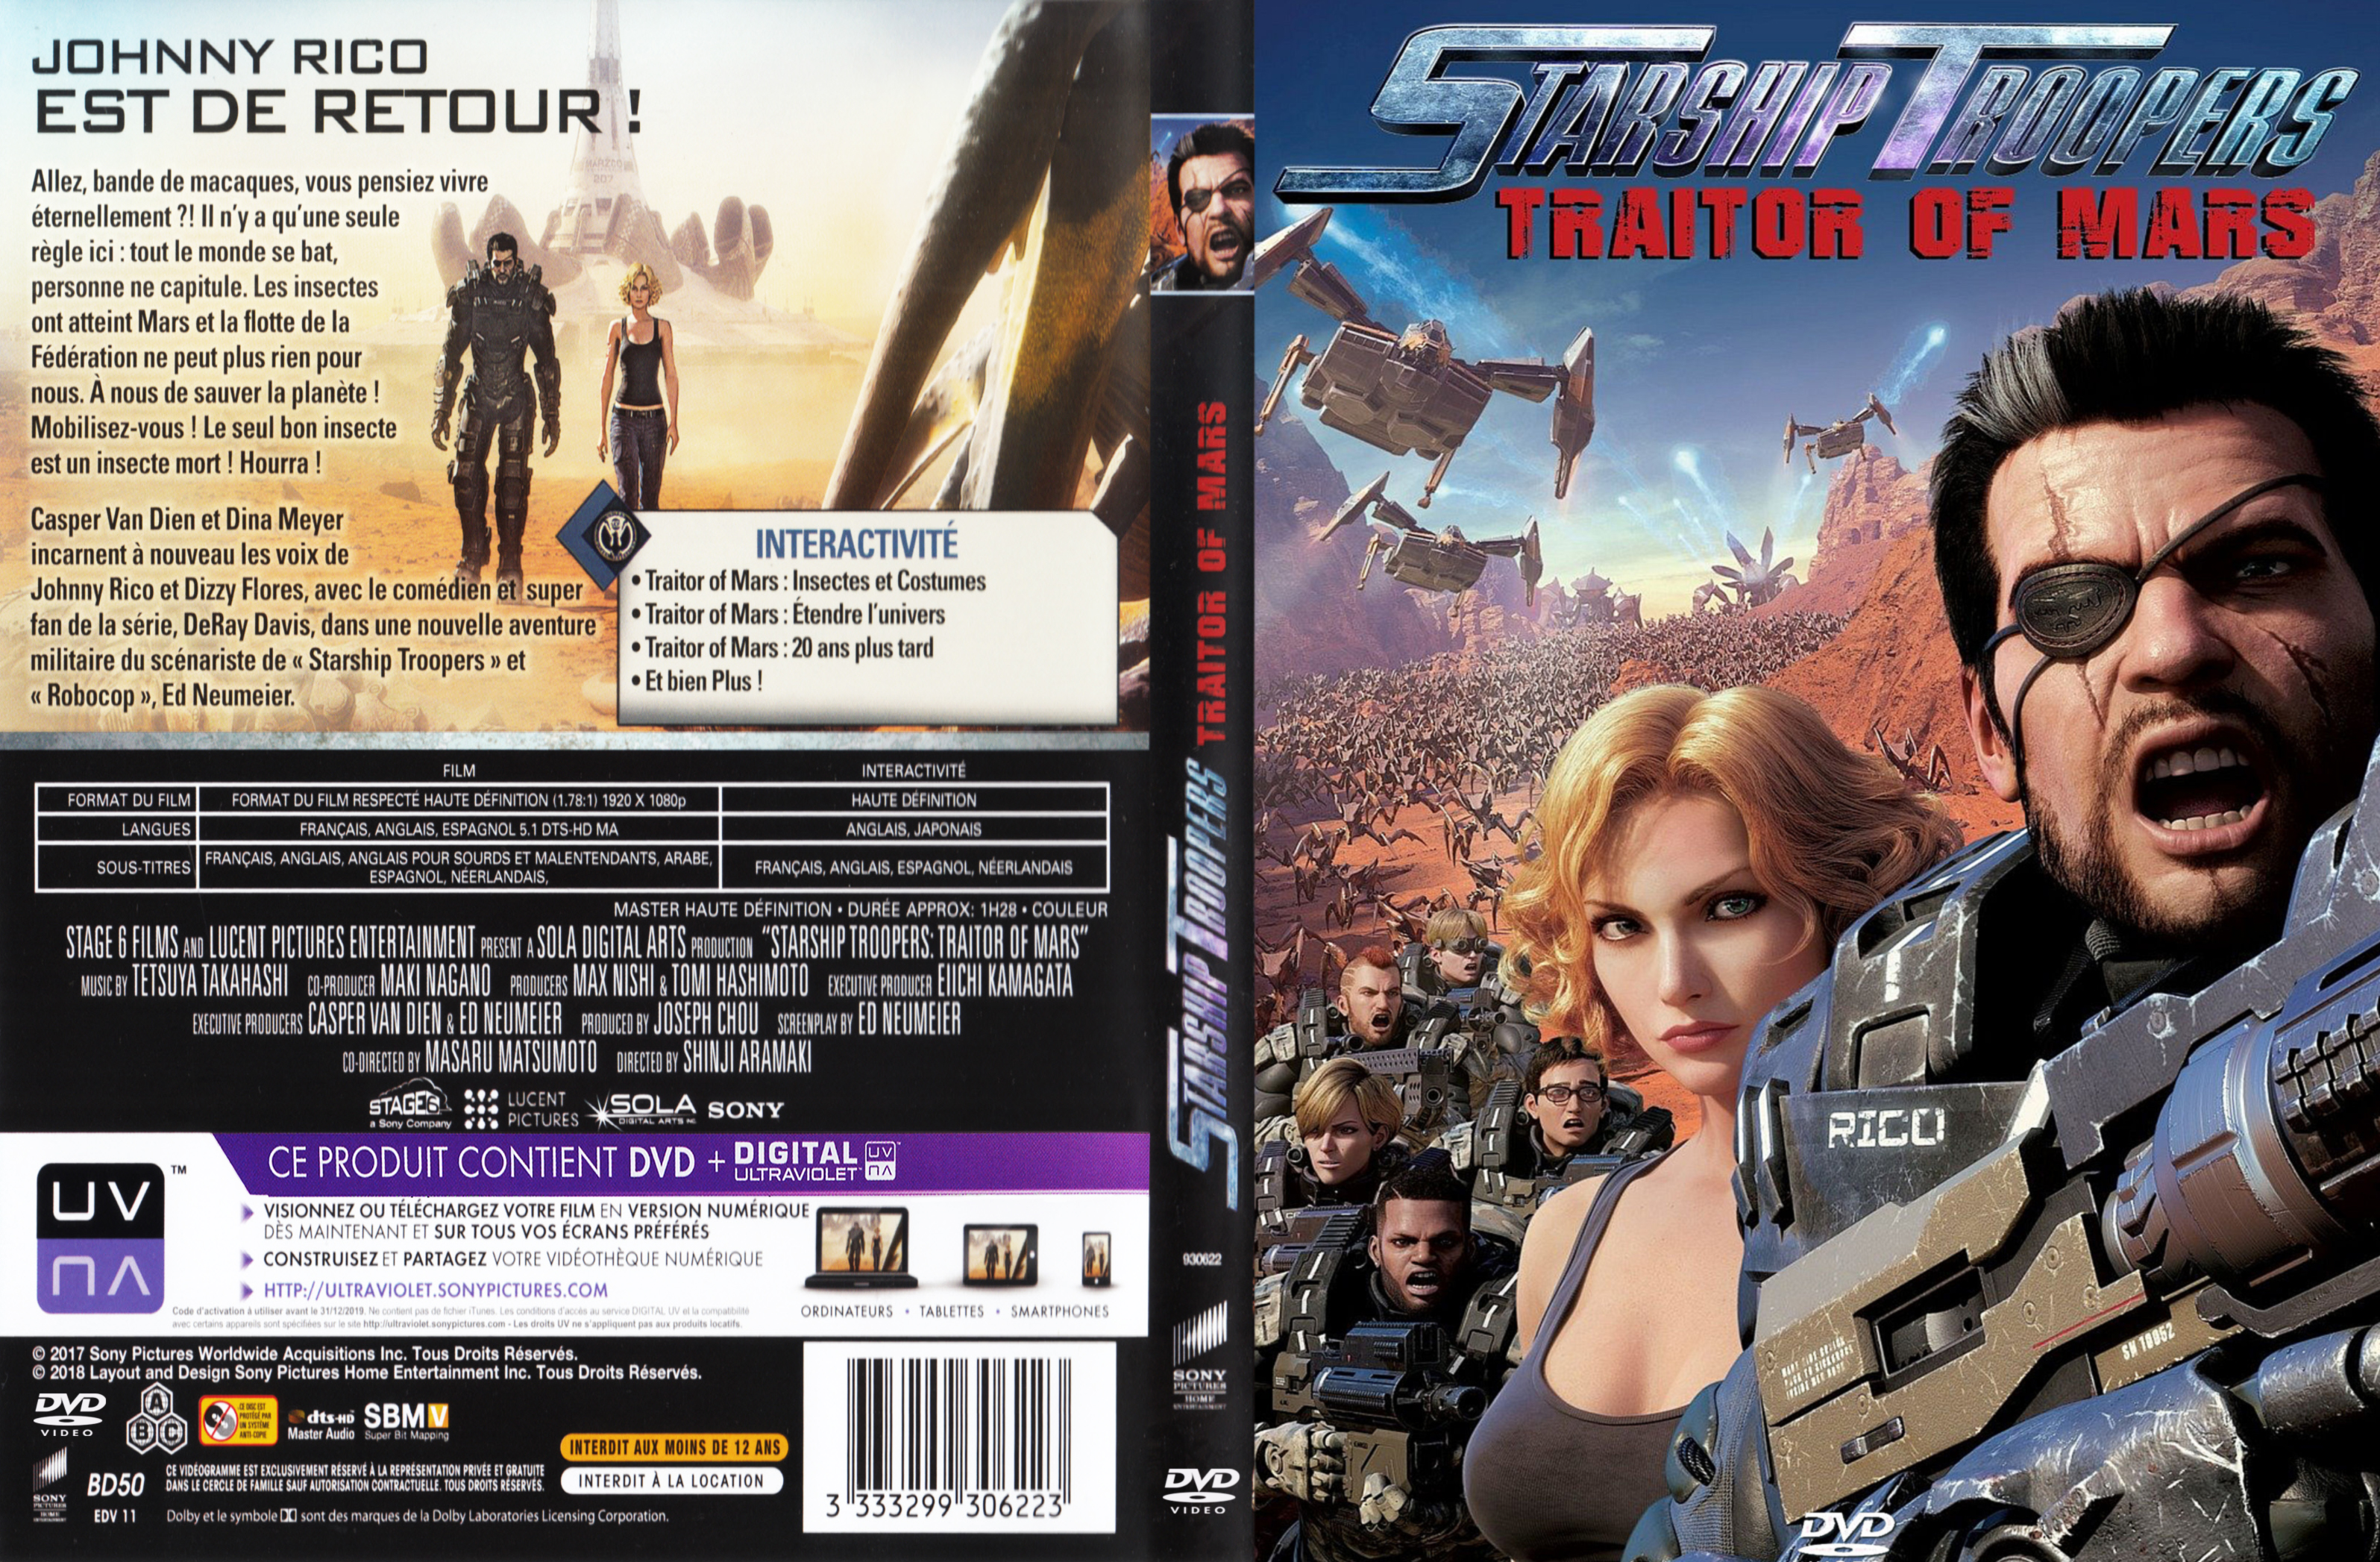 Jaquette DVD Starship Troopers Traitor of Mars custom